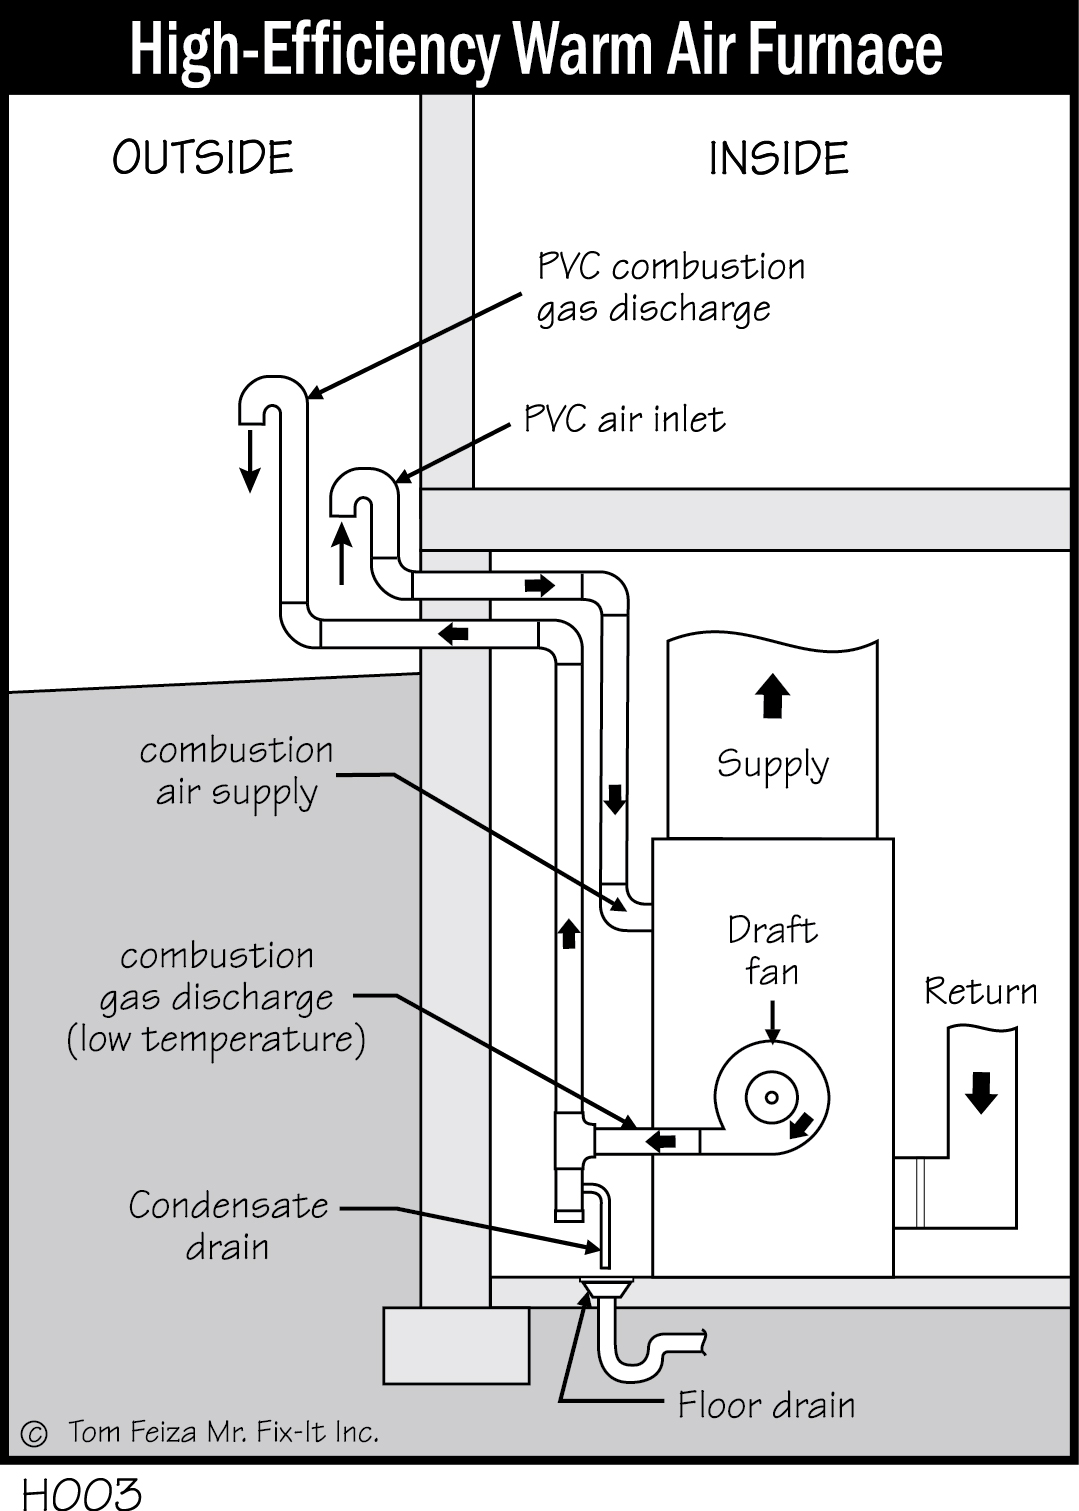 H003 - High-Efficiency Warm Air Furnace